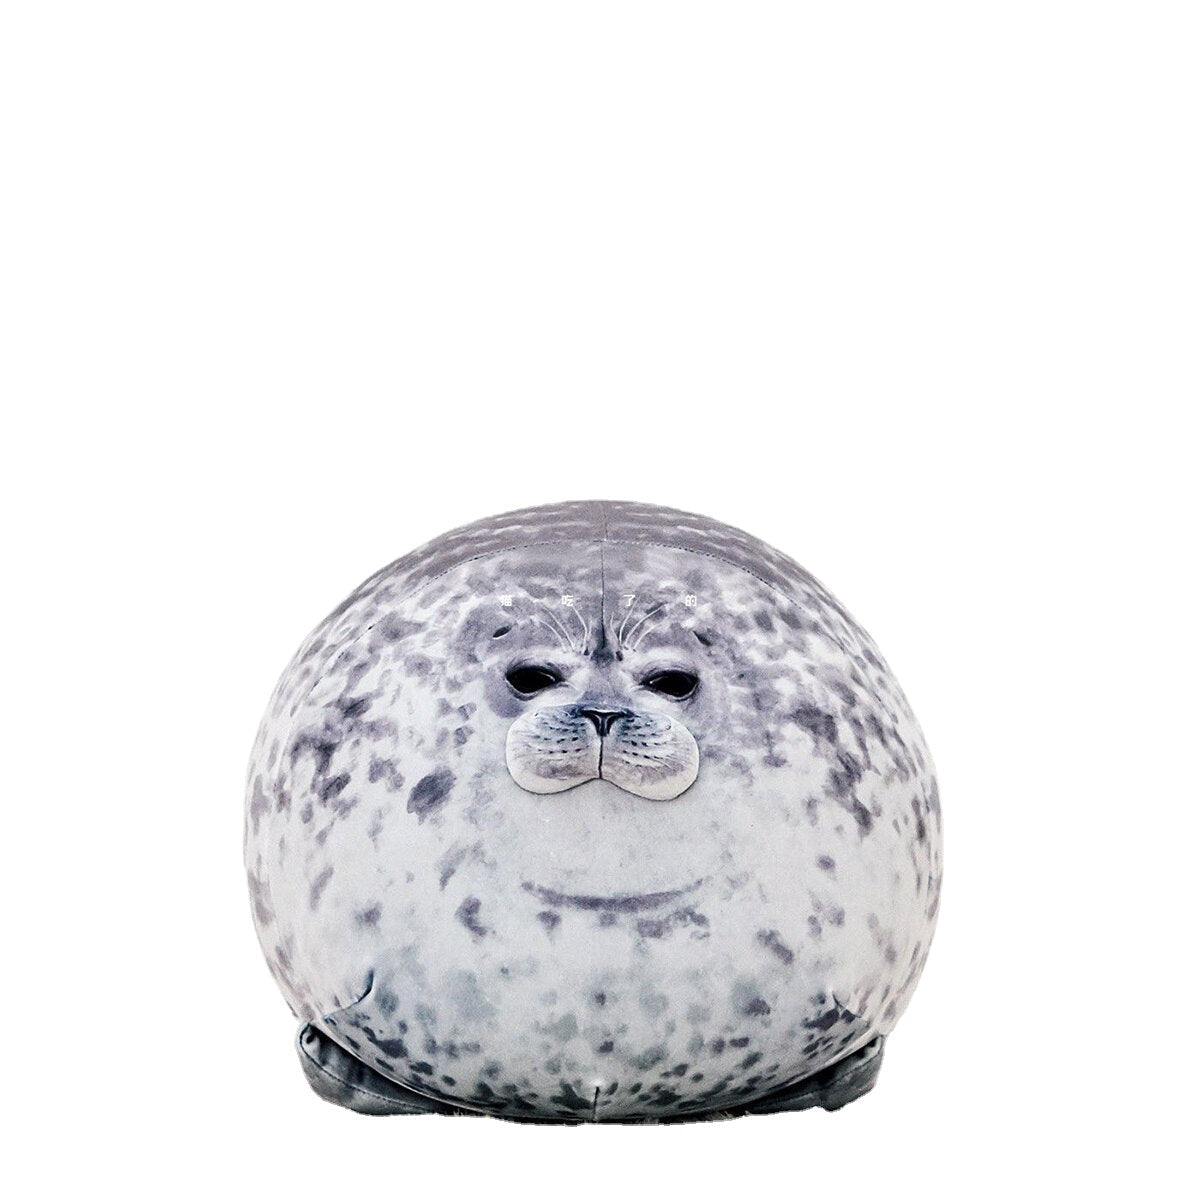 The Popular Chubby Seal Pillow Soft Bean Bag Pillow Cute Sea Lion Plush Toys Sea World Animal Dolls For Kids